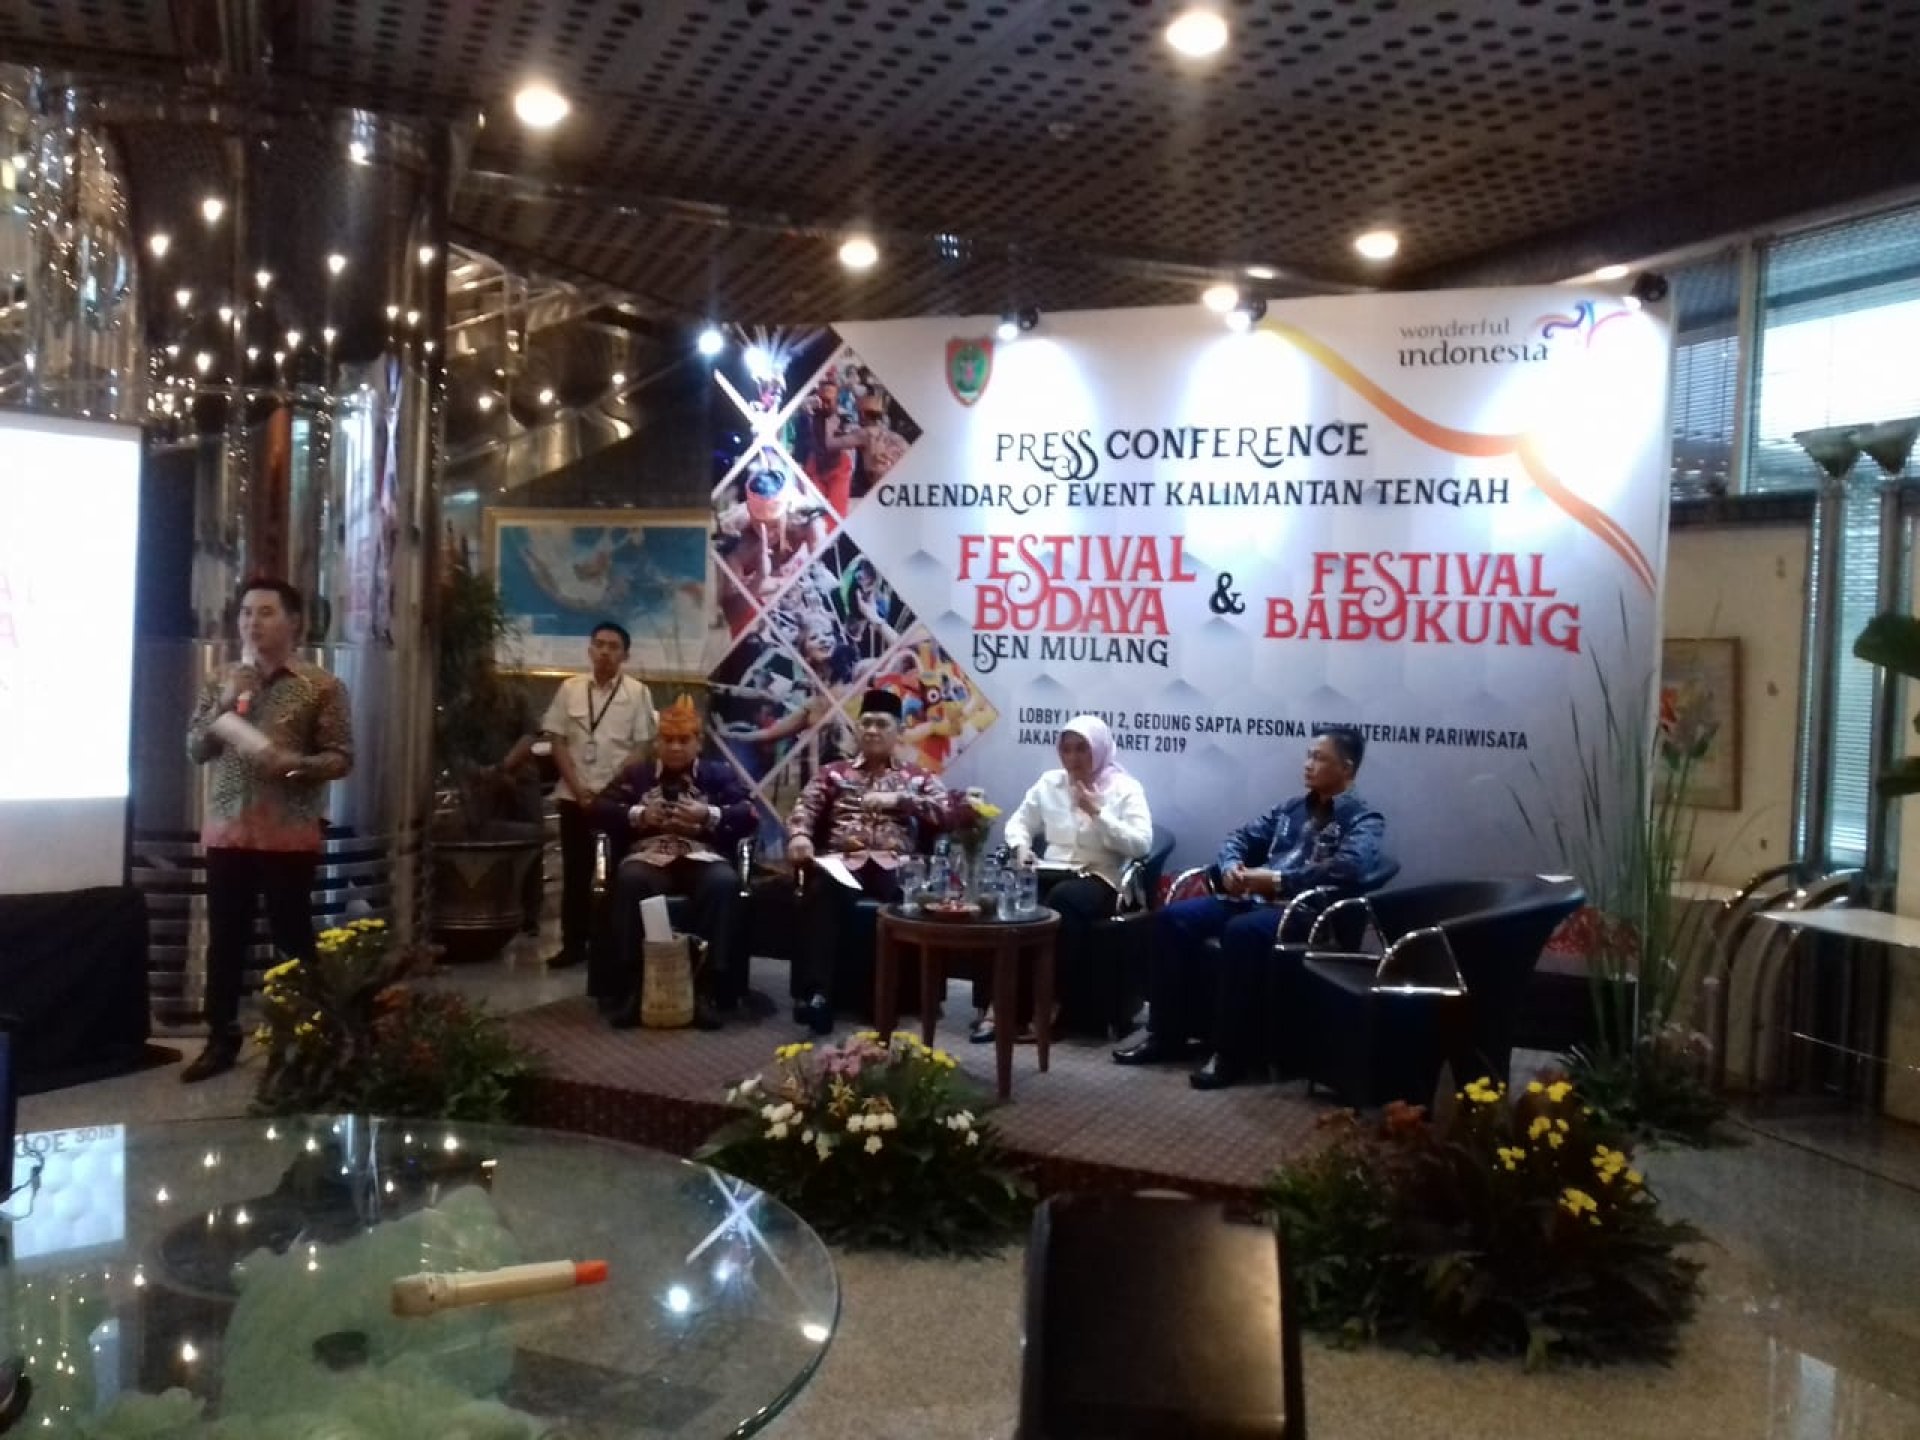 Pemprov Kalteng Gelar Press Conference FBIM dan Festival Babukung